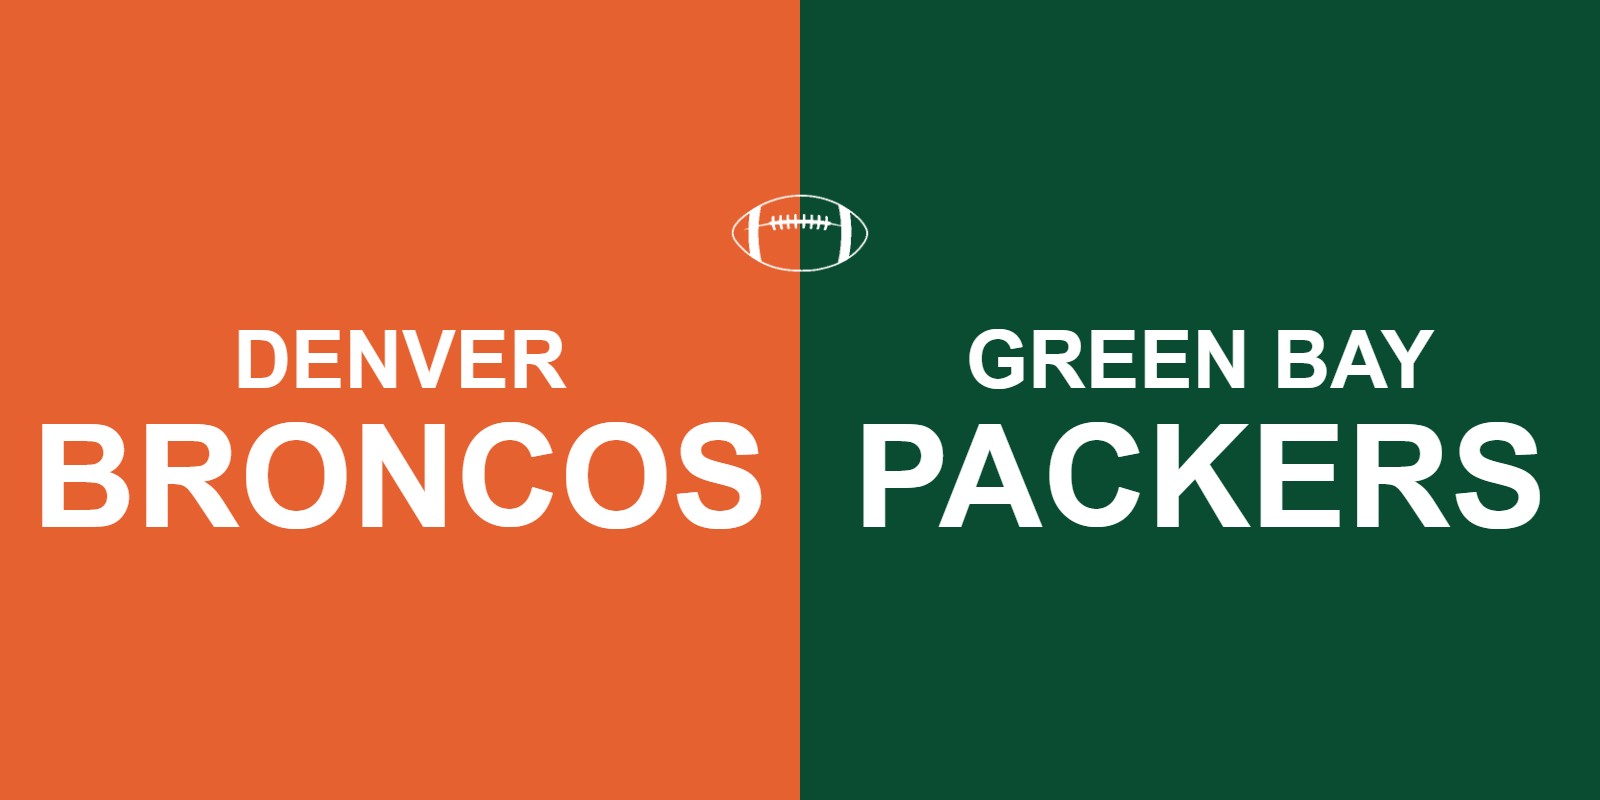 Broncos vs Packers